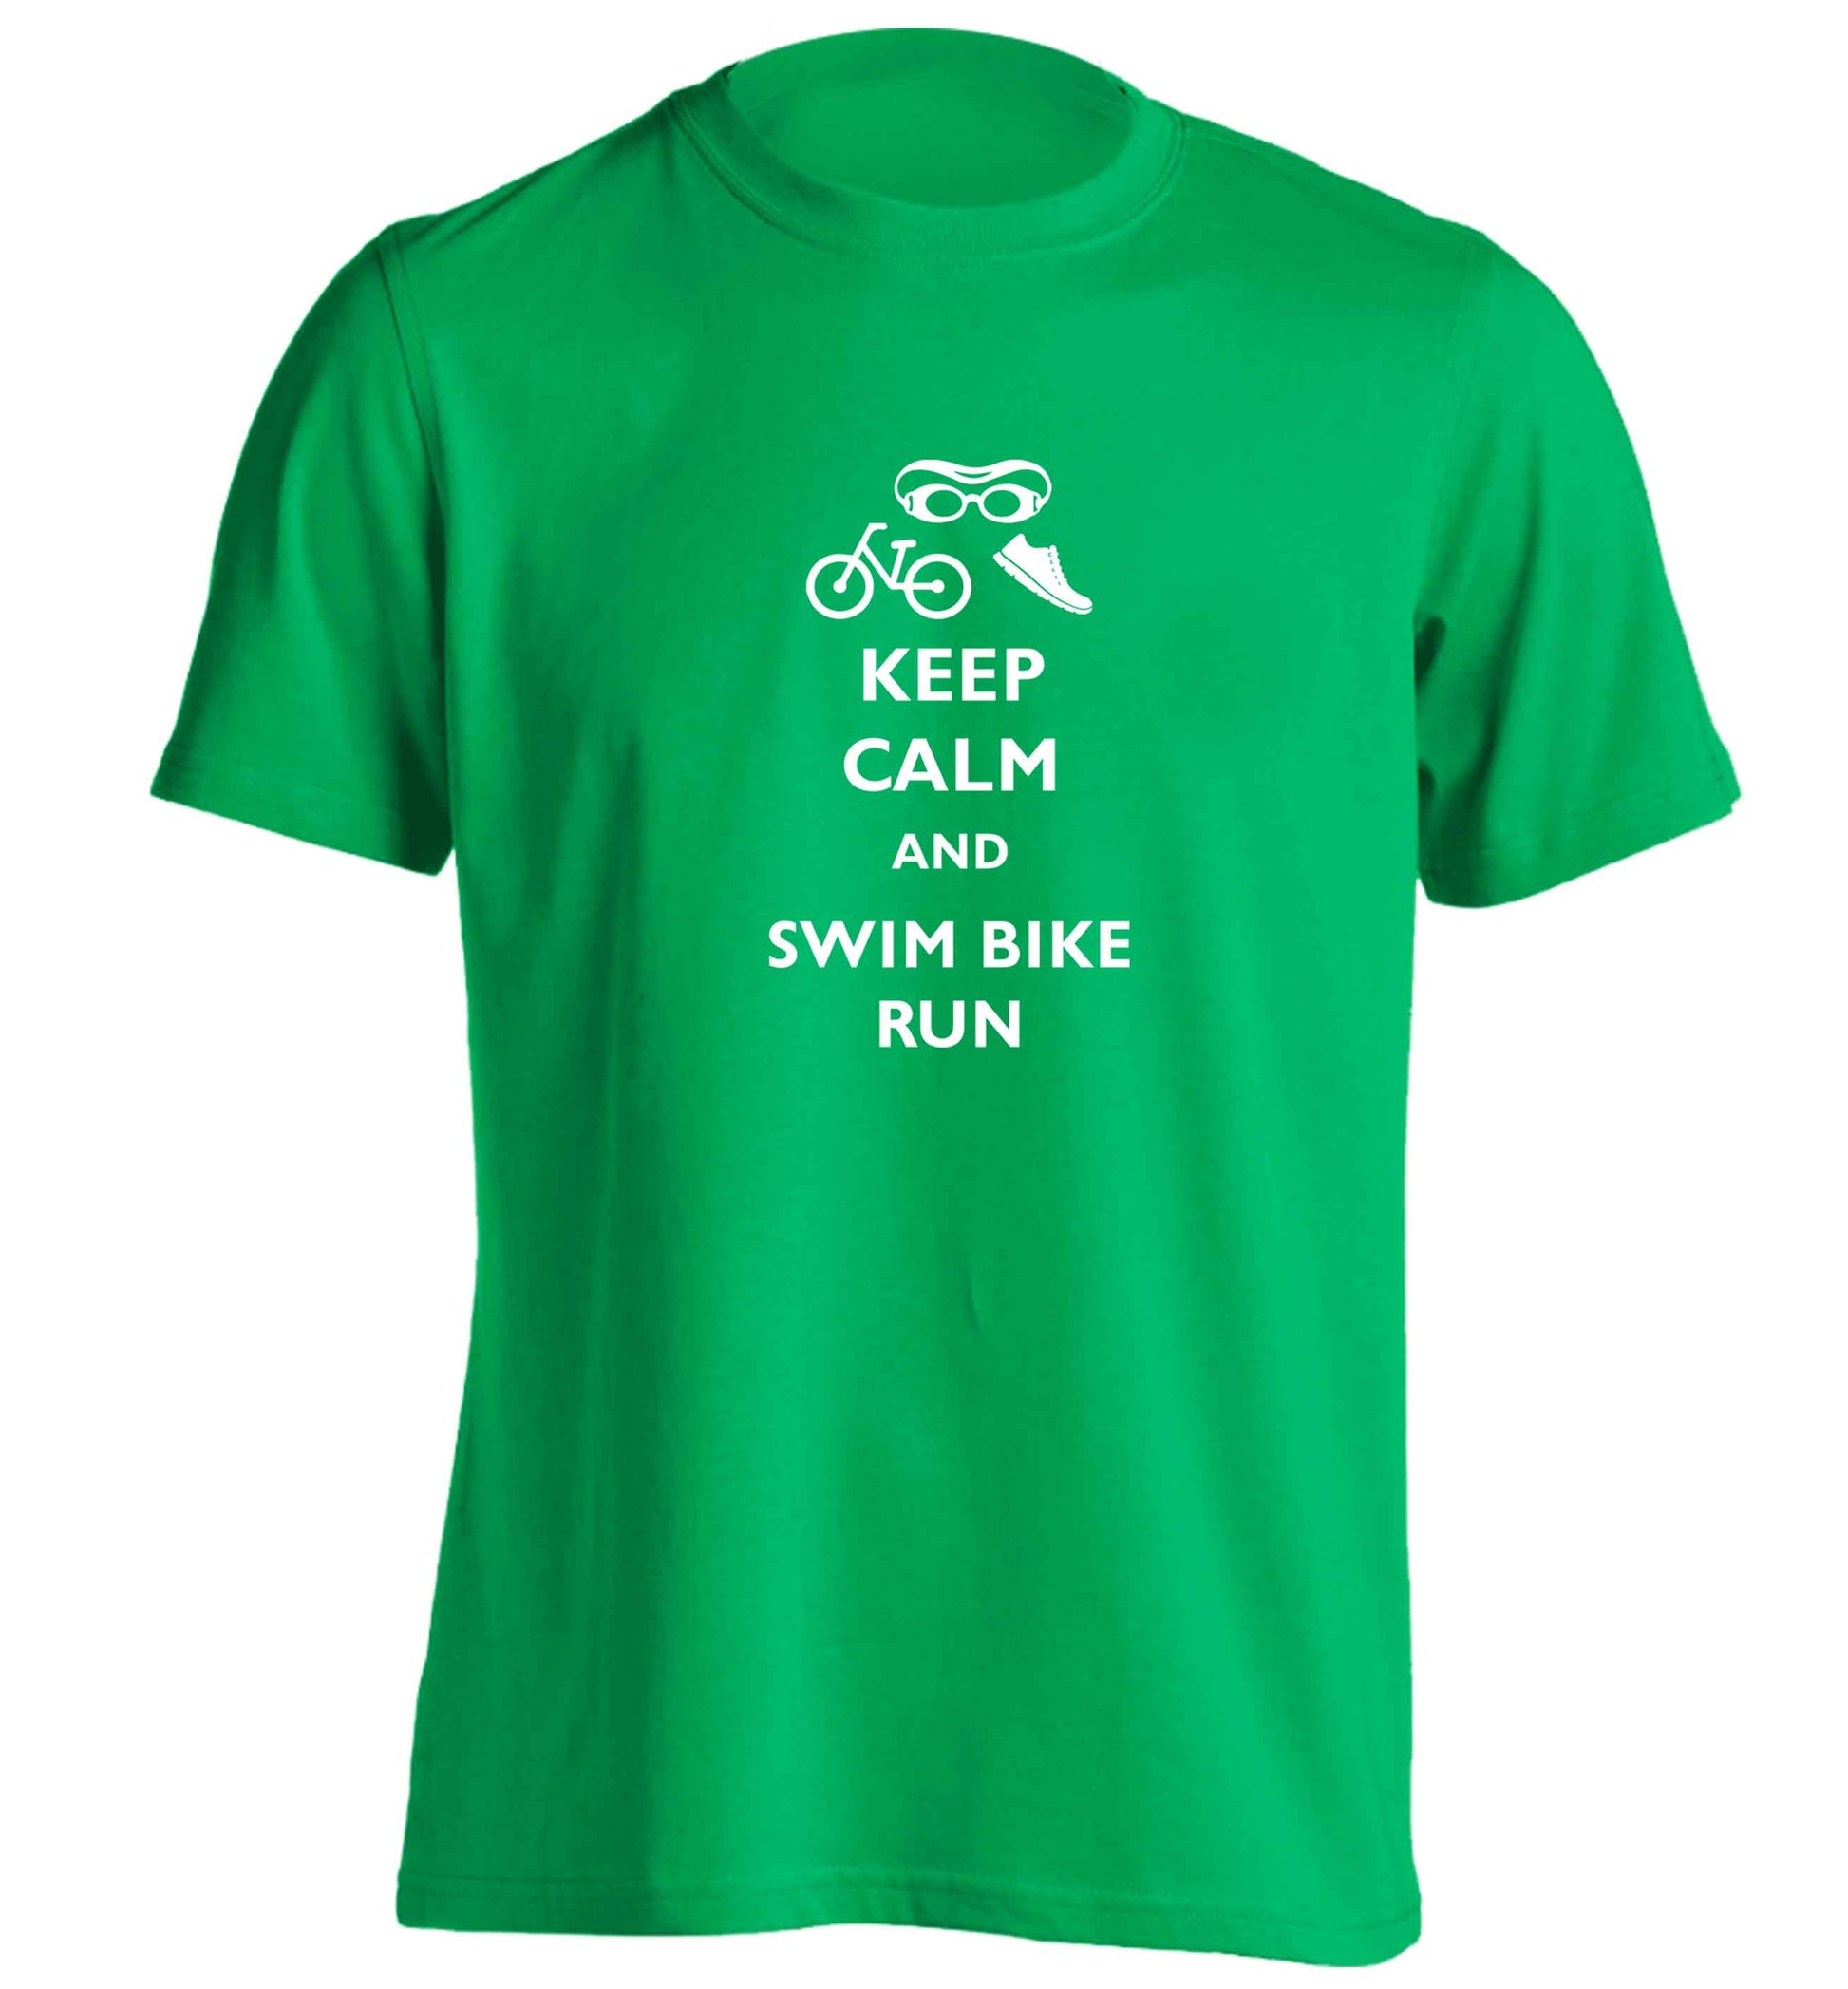 Keep calm and swim bike run adults unisex green Tshirt 2XL